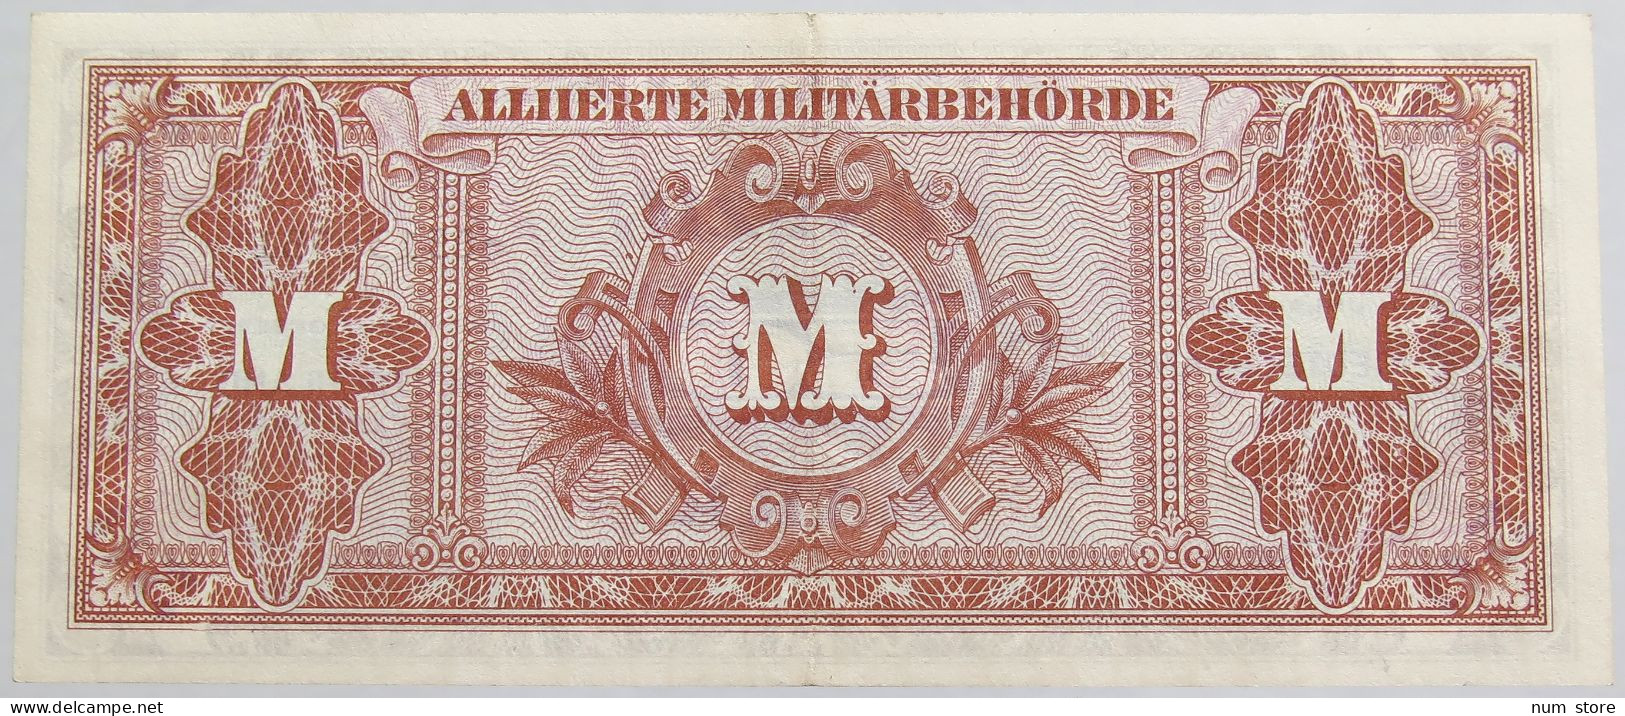 GERMANY 50 MARK 1944 #alb012 0105 - 50 Reichsmark